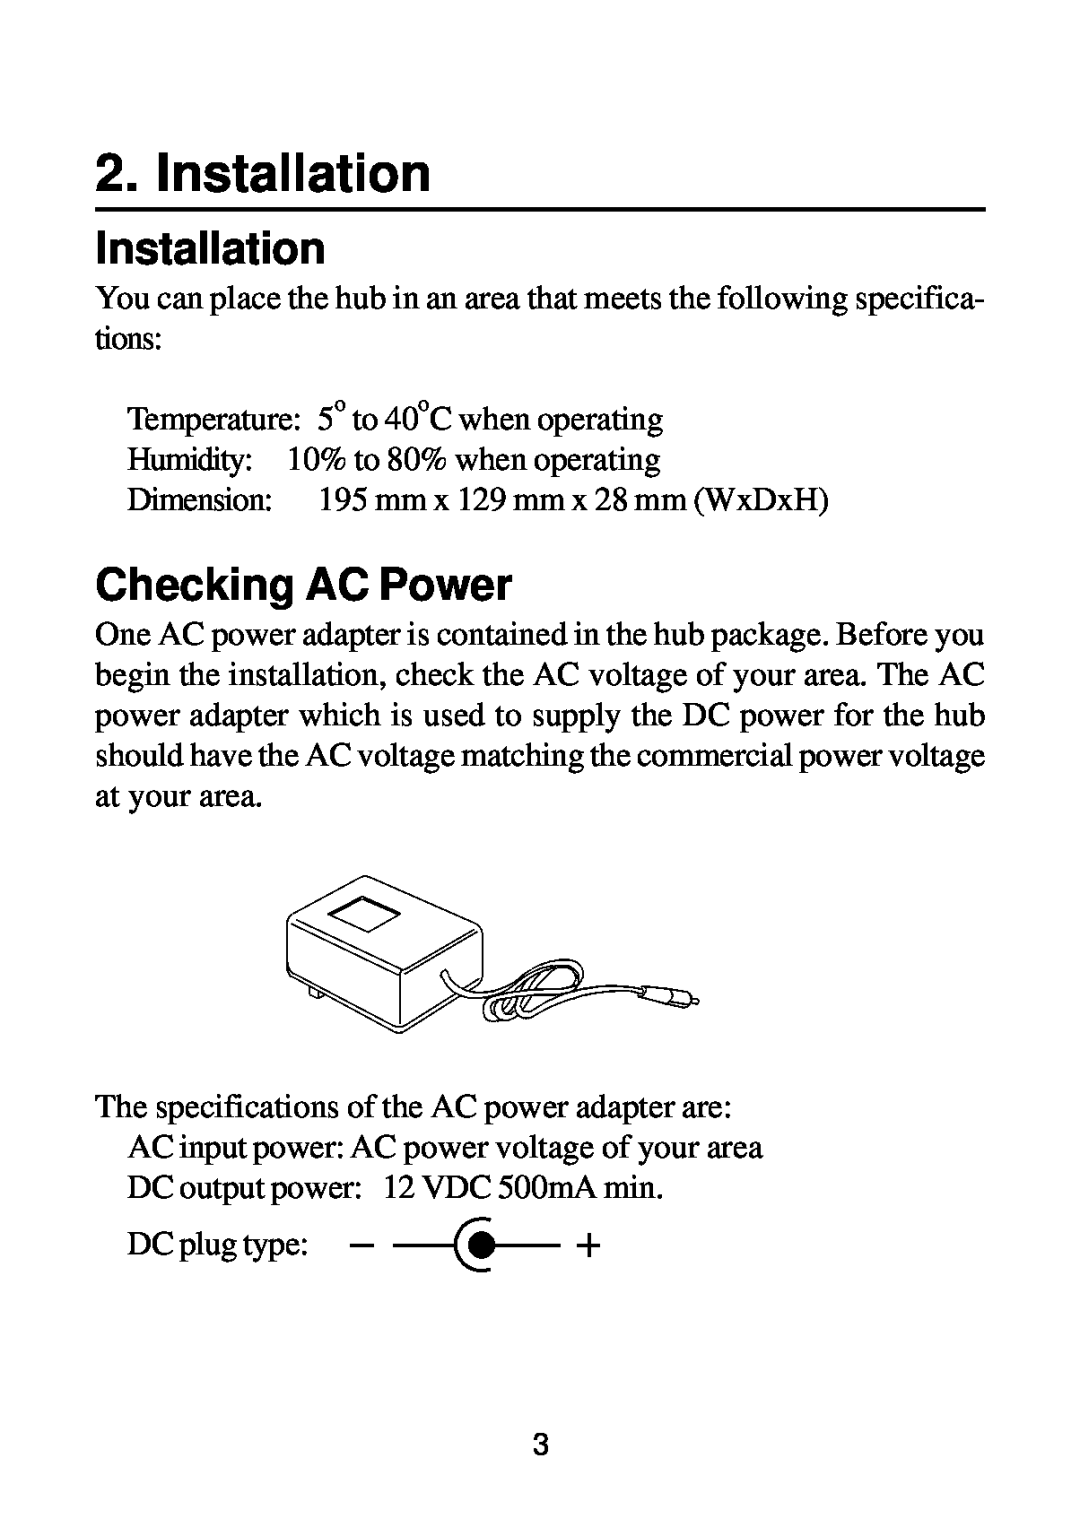 KTI Networks DH-8T manual Installation, Checking AC Power 